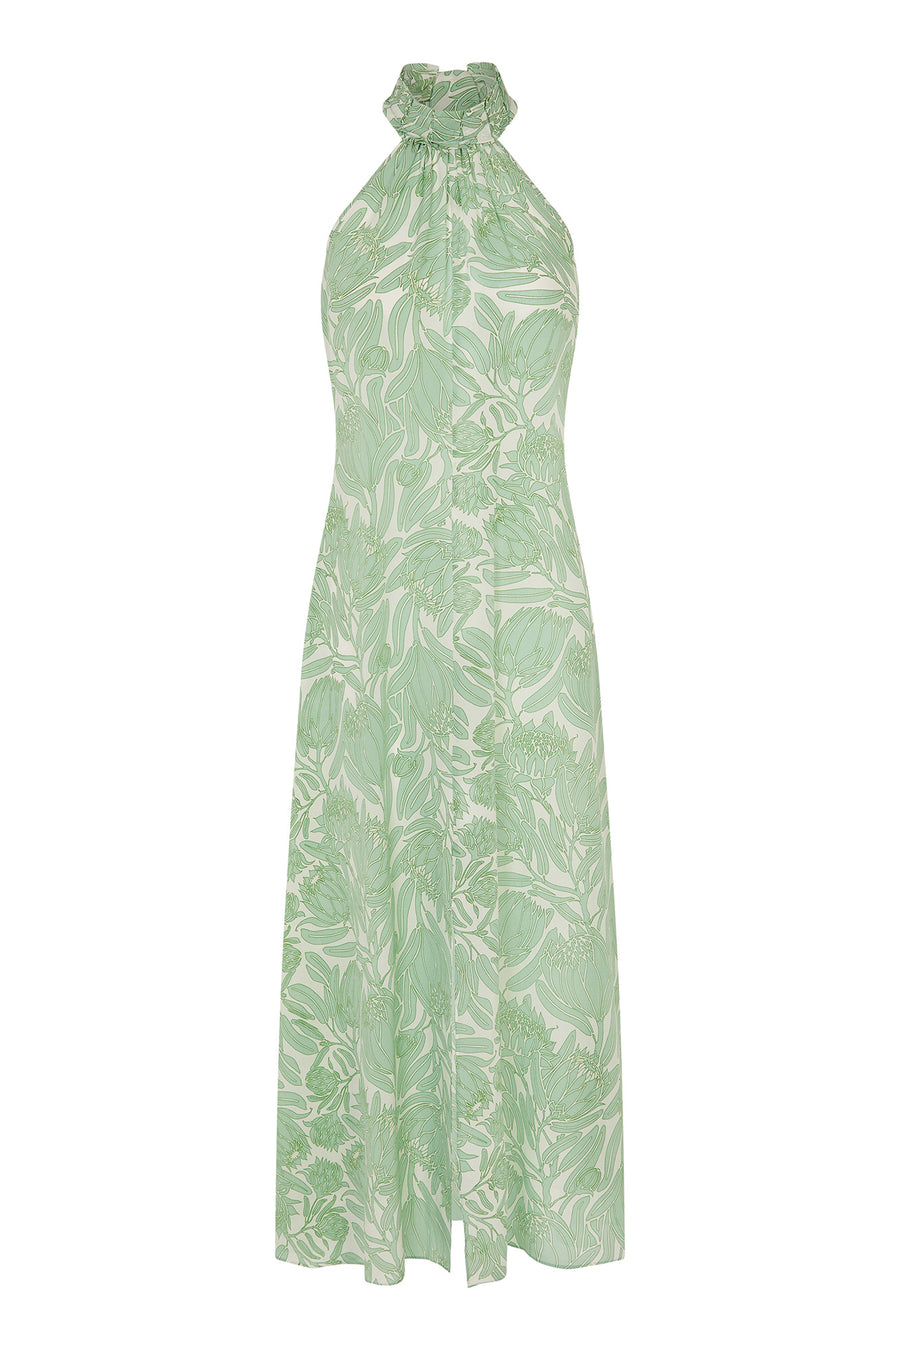 flattering long silk backless Dena dress in green Protea print by Lotty B Mustique